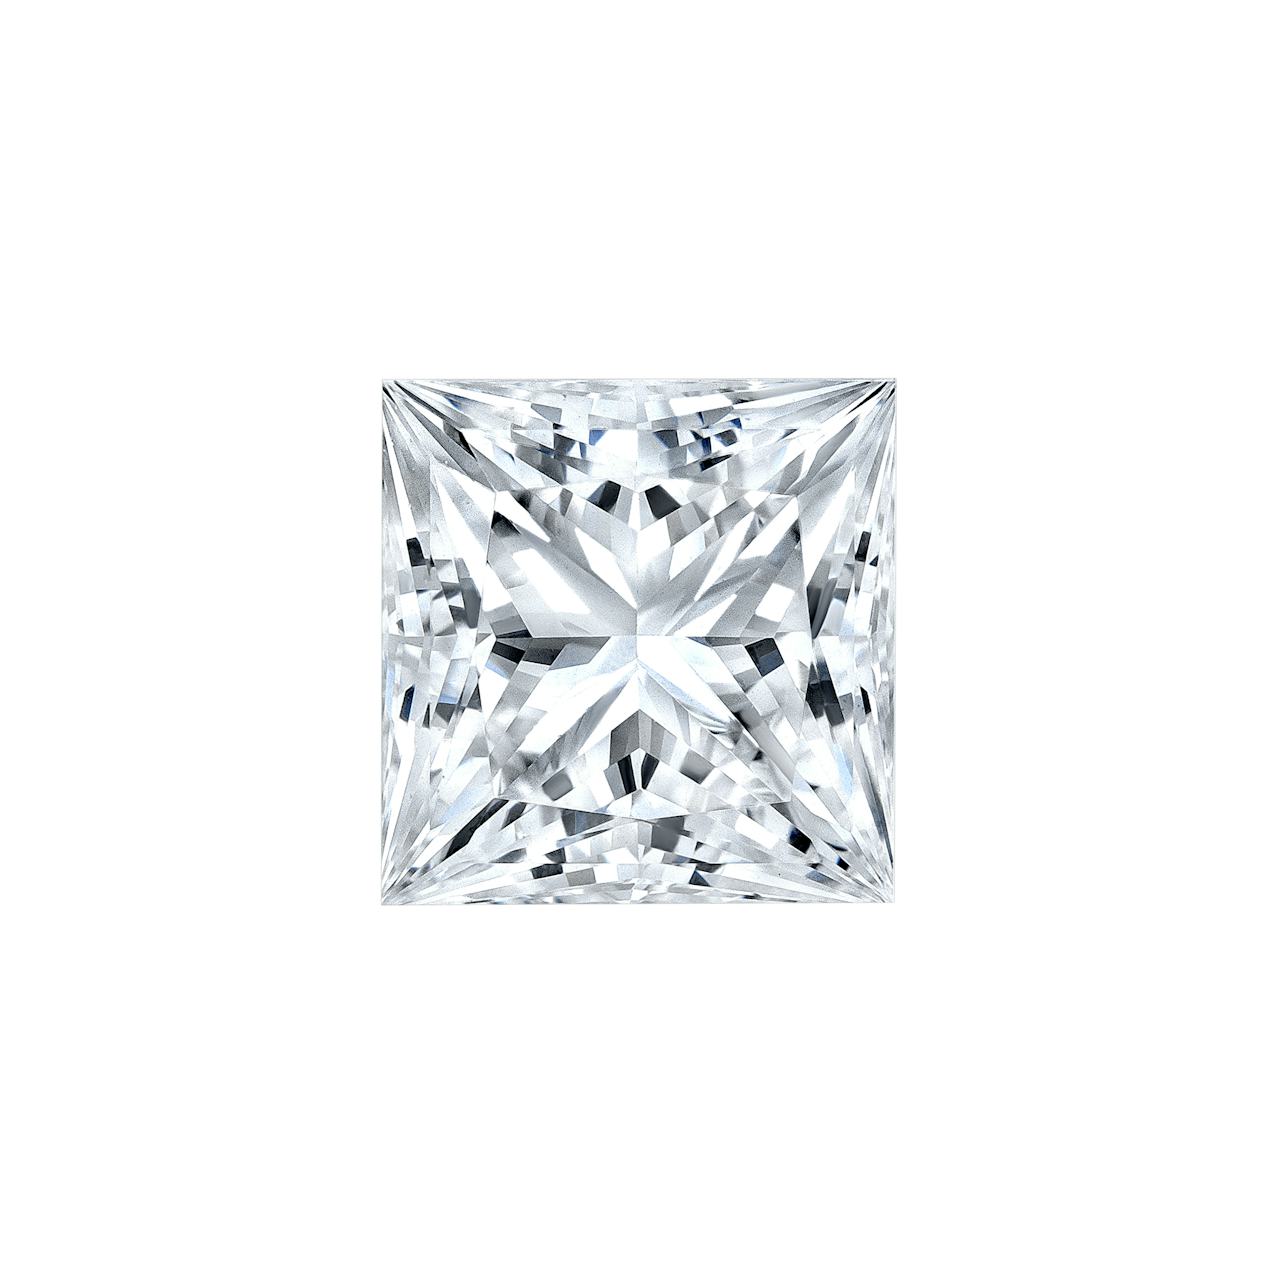 Close-up of Princess cut diamond